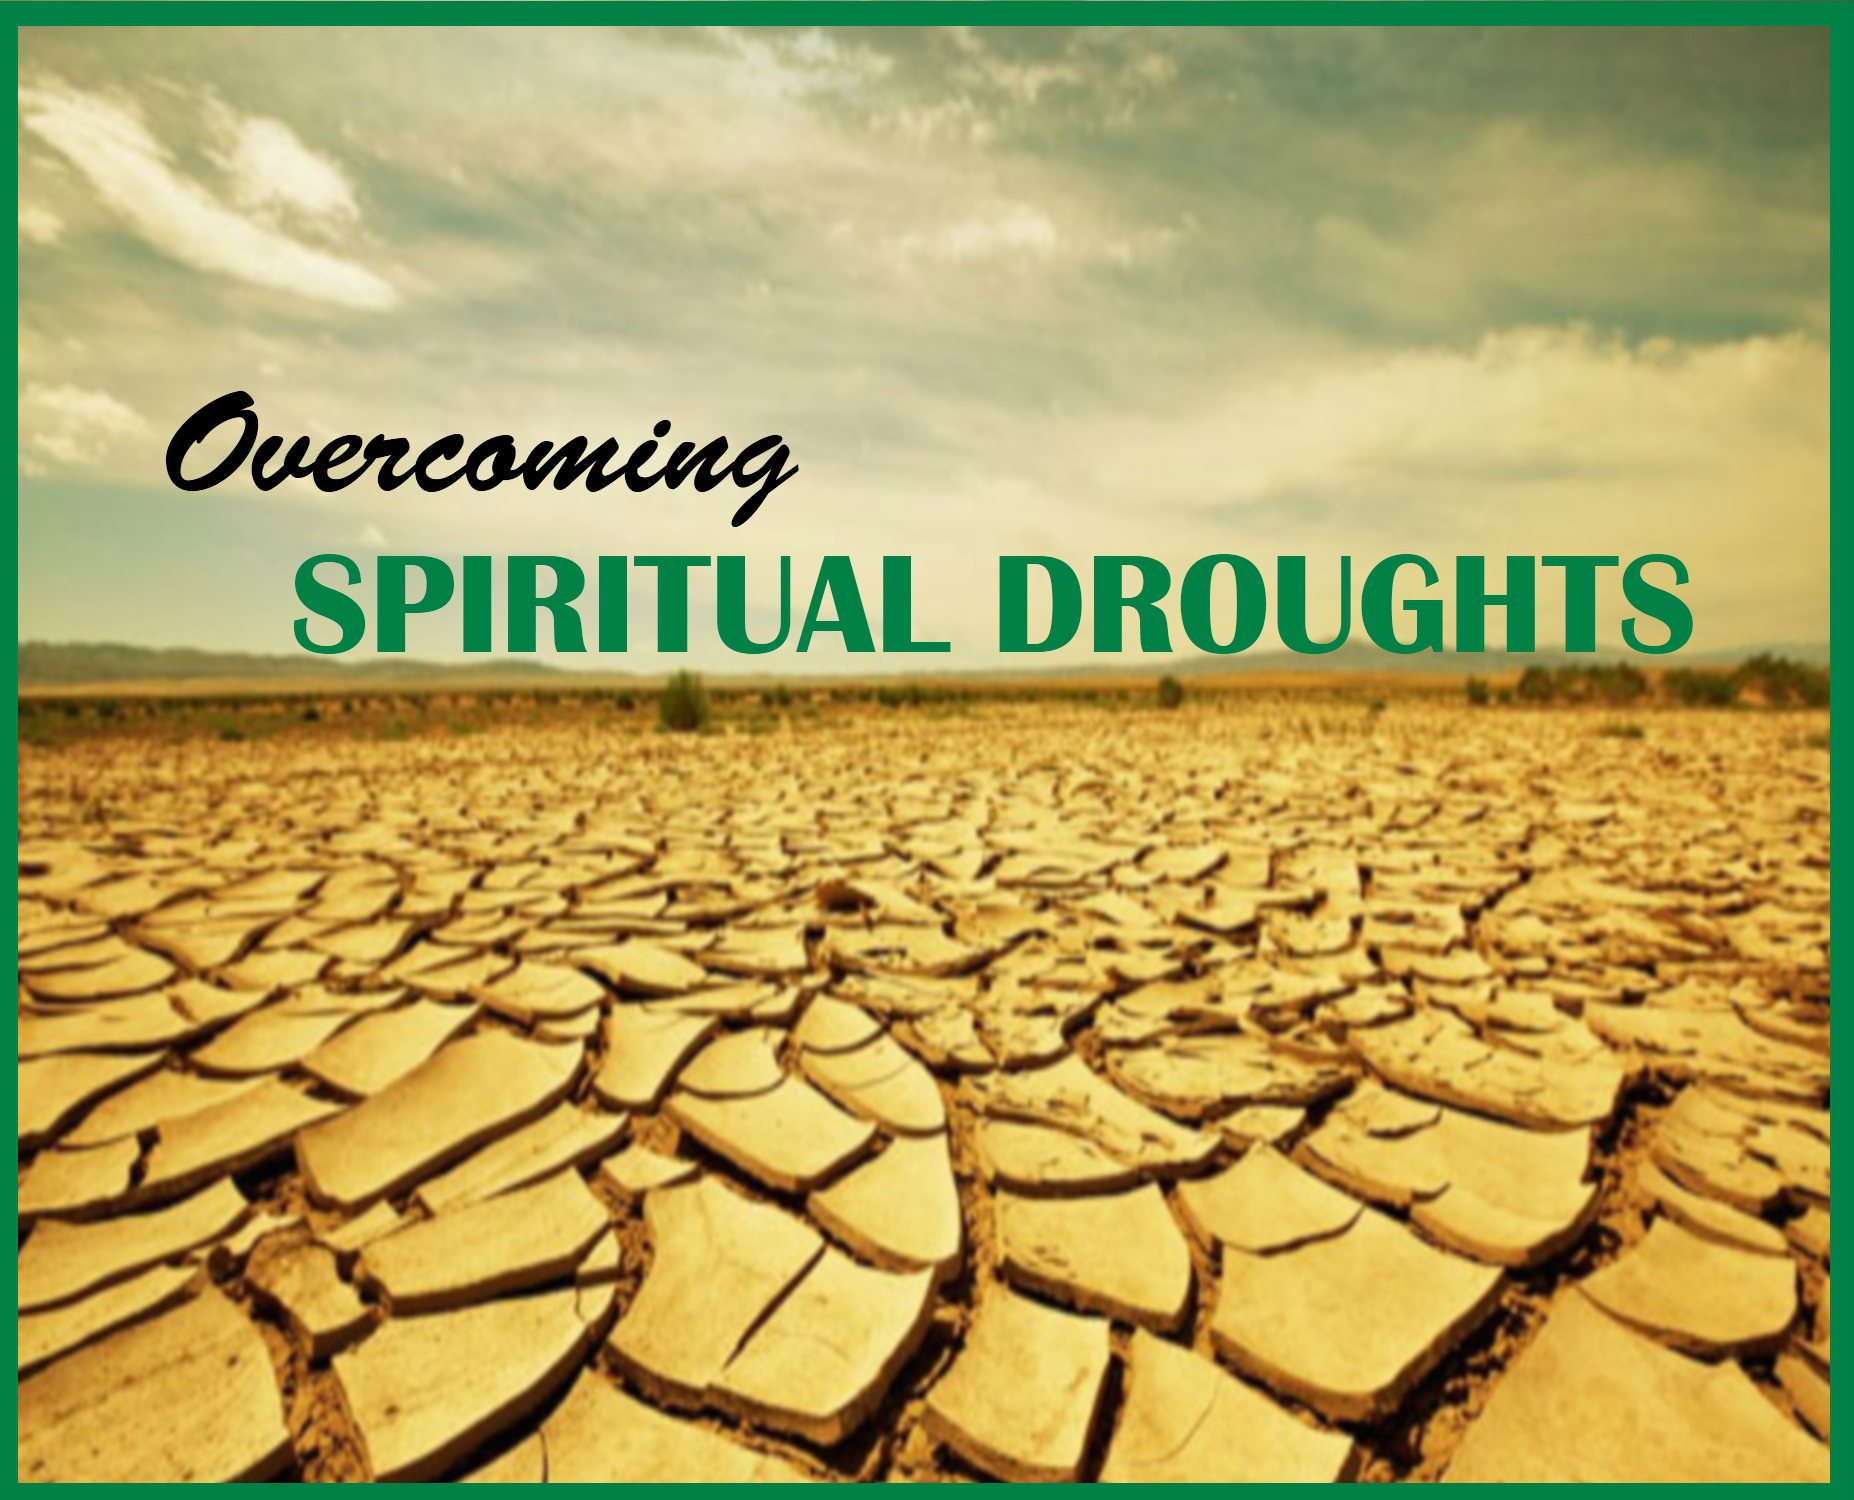 OVERCOMING SPIRITUAL DROUGHTS (EX.15:19-24)